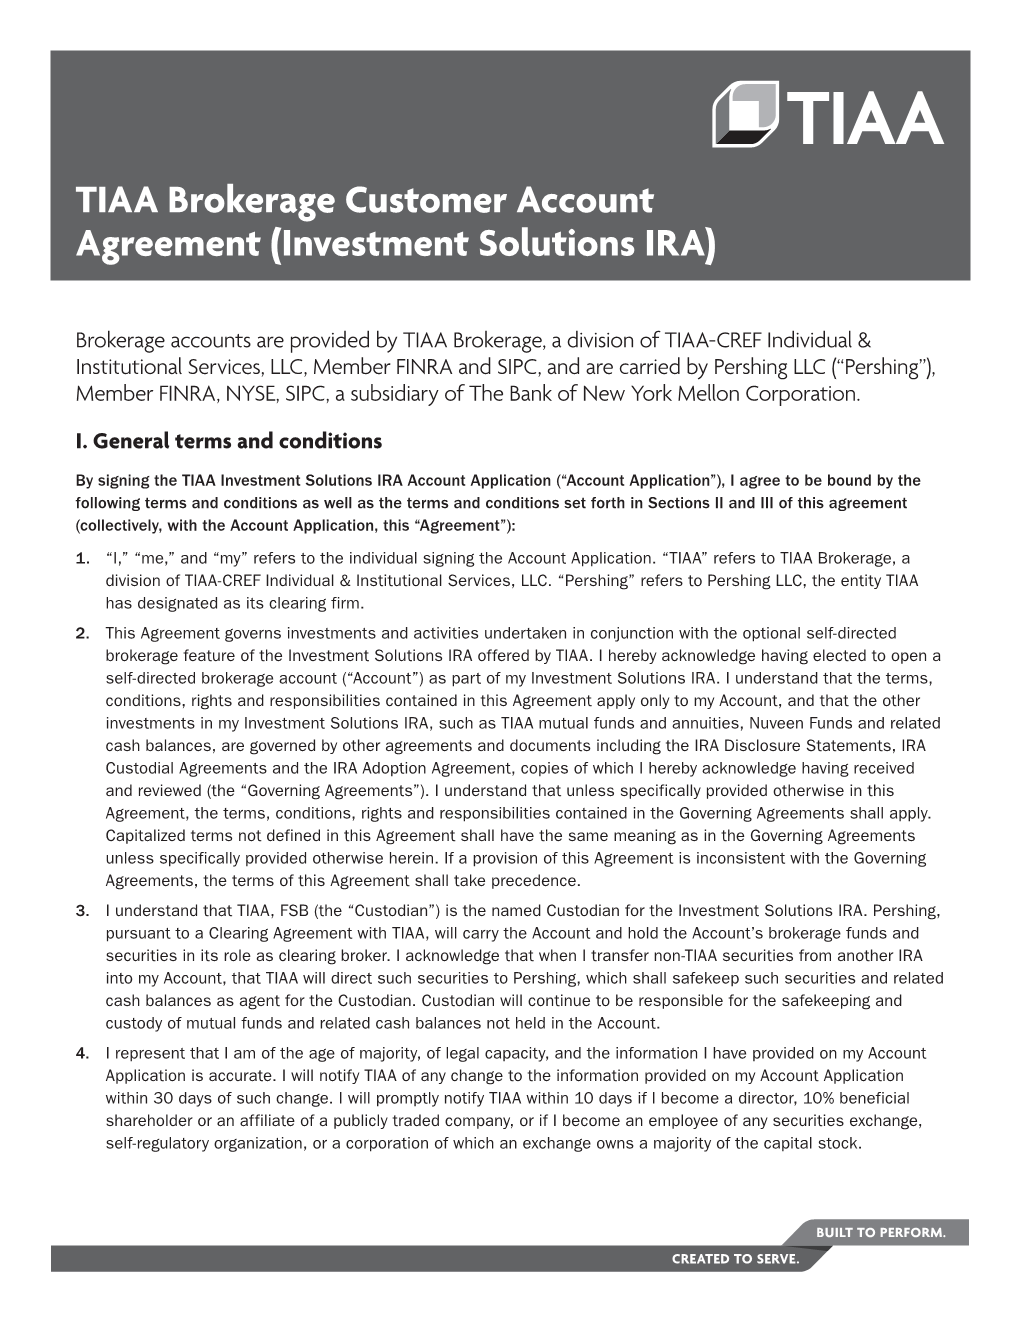 TIAA Brokerage Customer Account Agreement (Investment Solutions IRA)